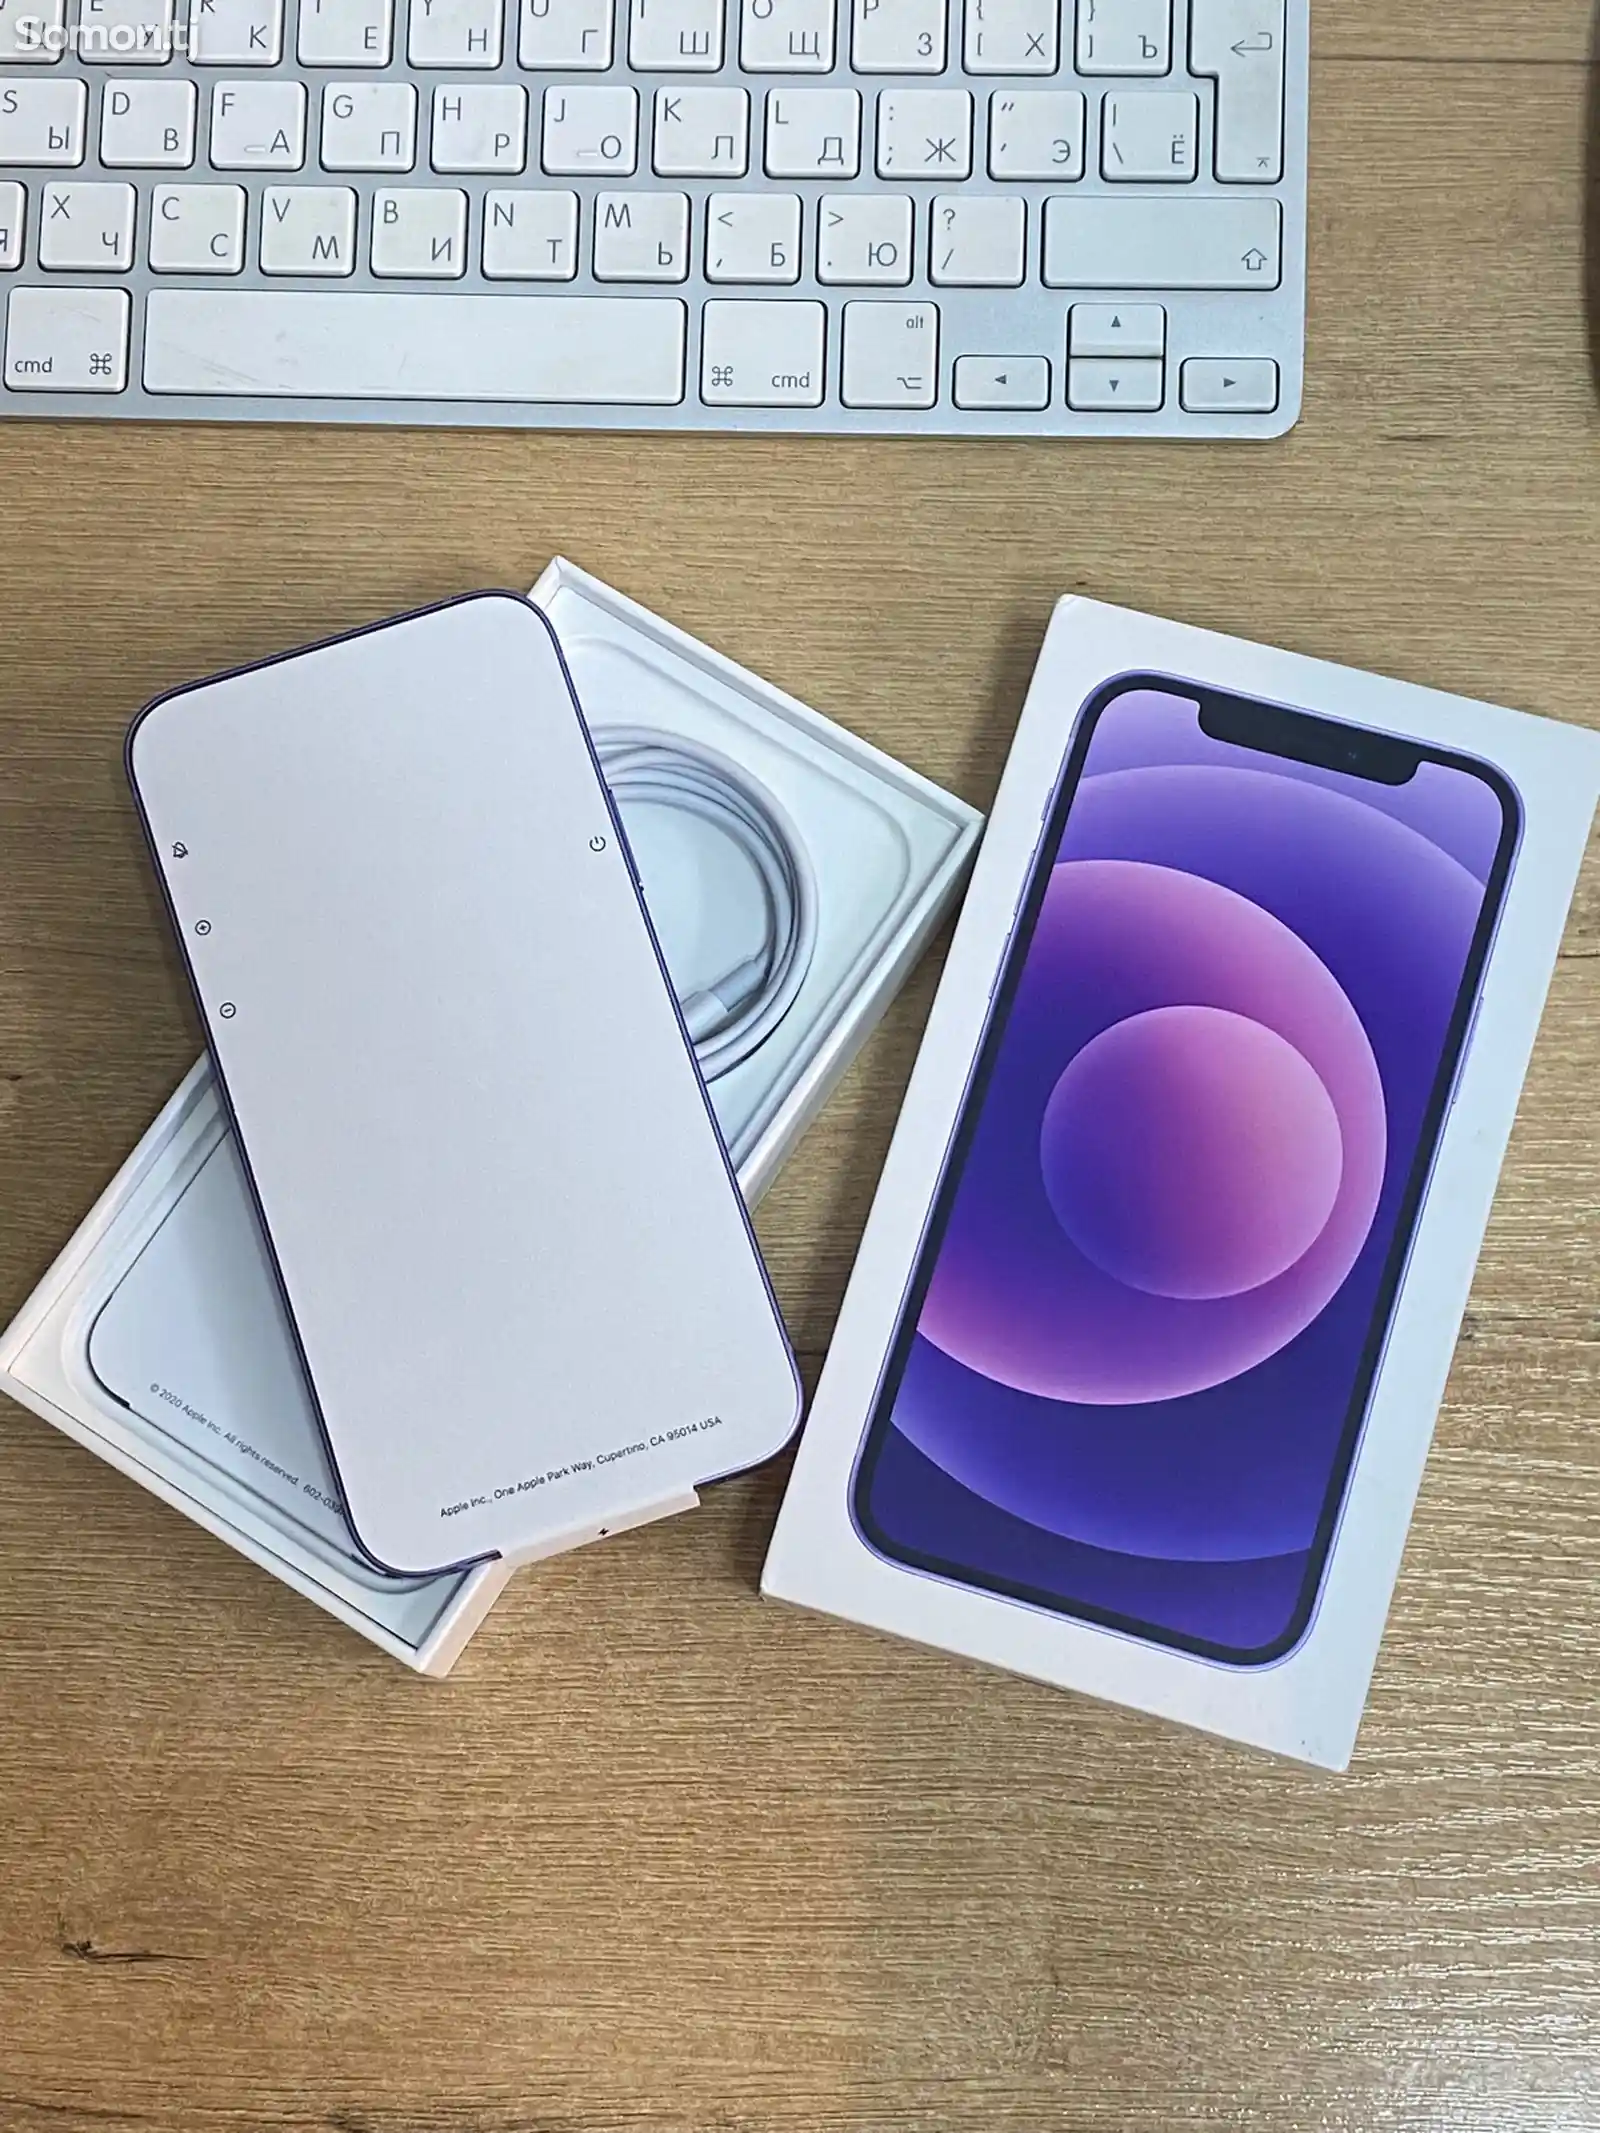 Apple iPhone 12, 128 gb, Purple-2